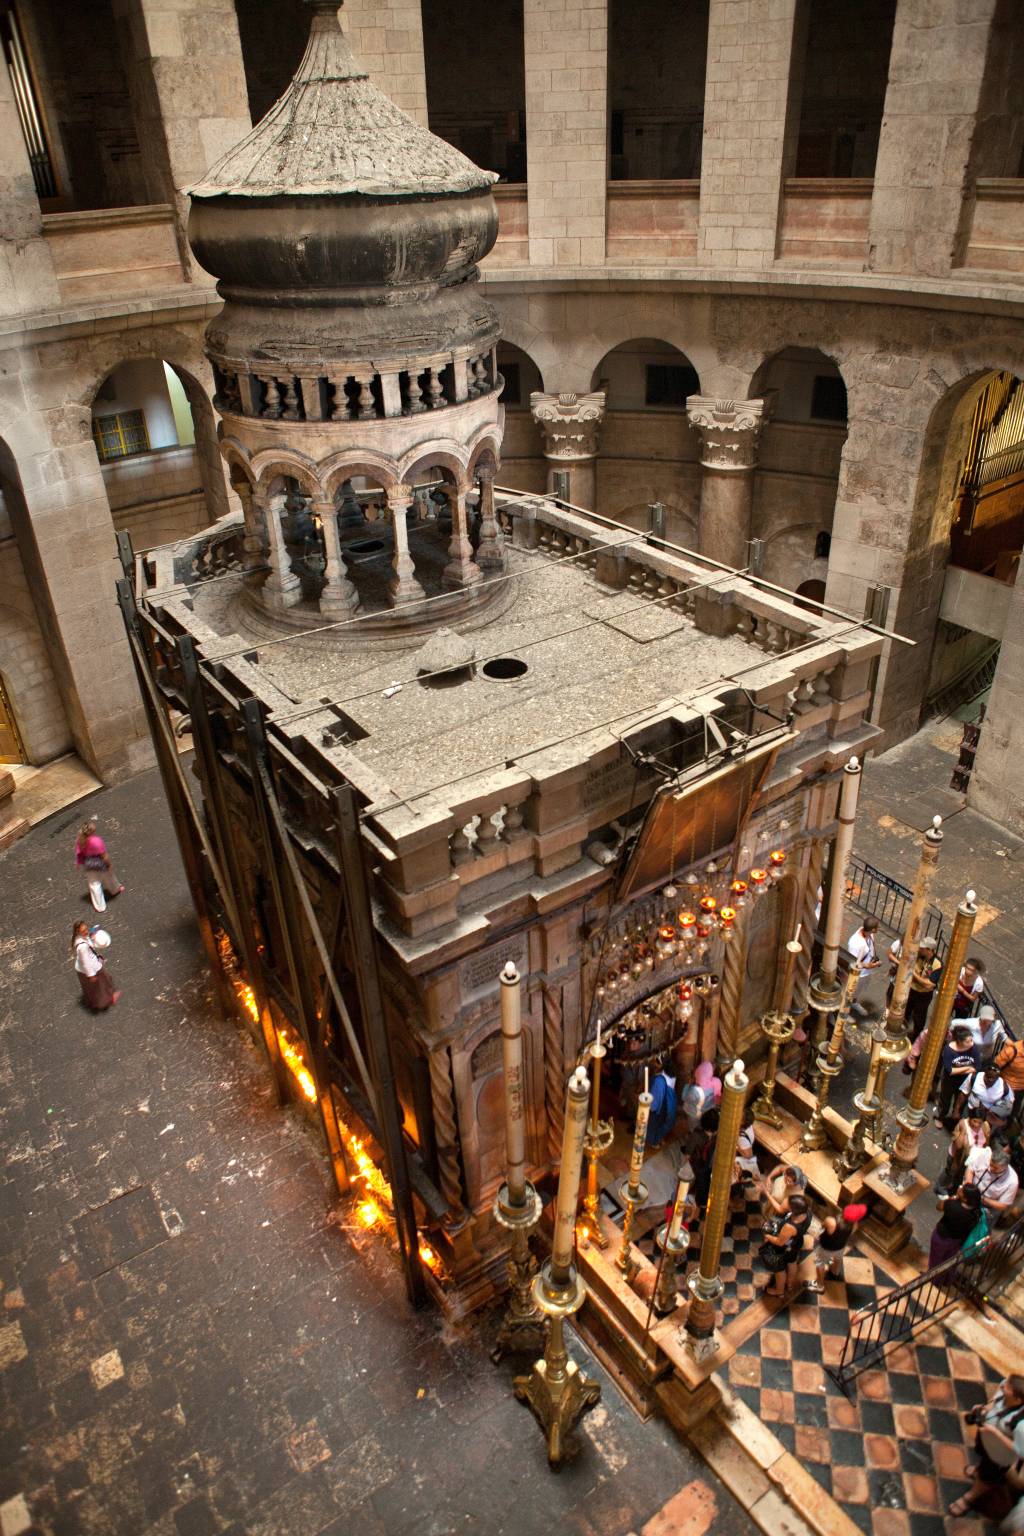 Edícula - tumba de Jesus Cristo na Basílica do Santo Sepulcro, em Jerusalém, Israel